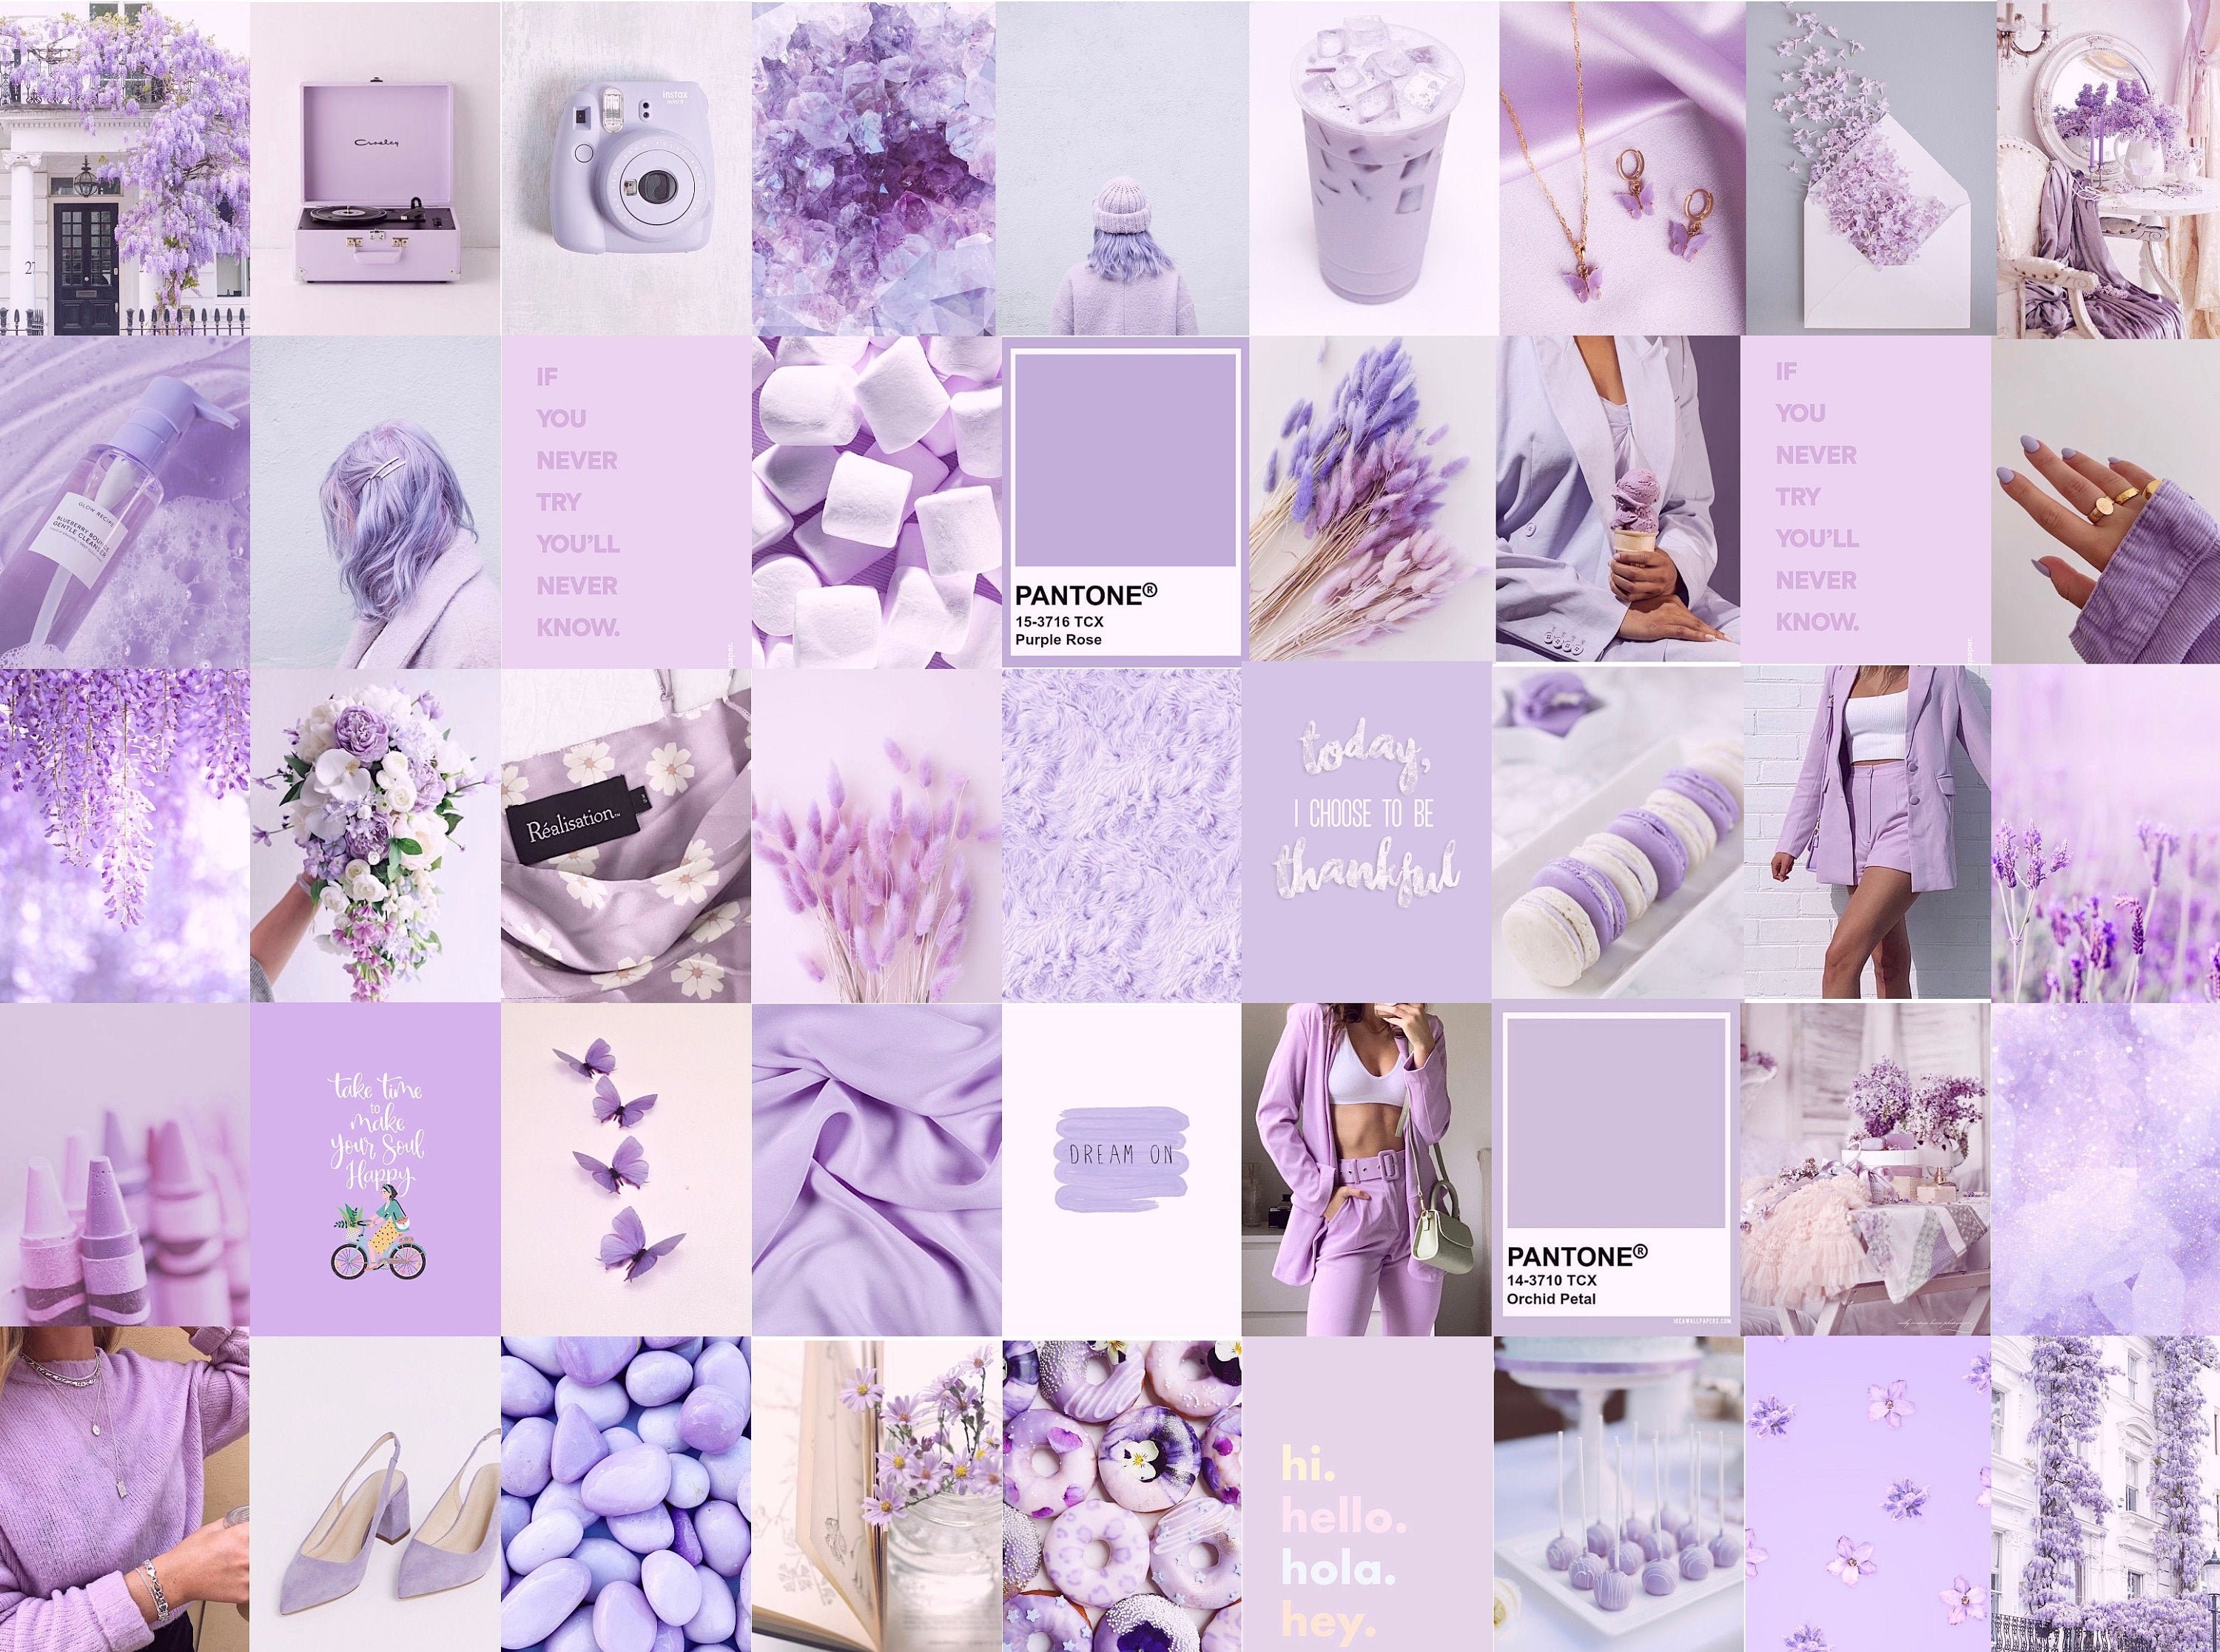 Lavender Aesthetic